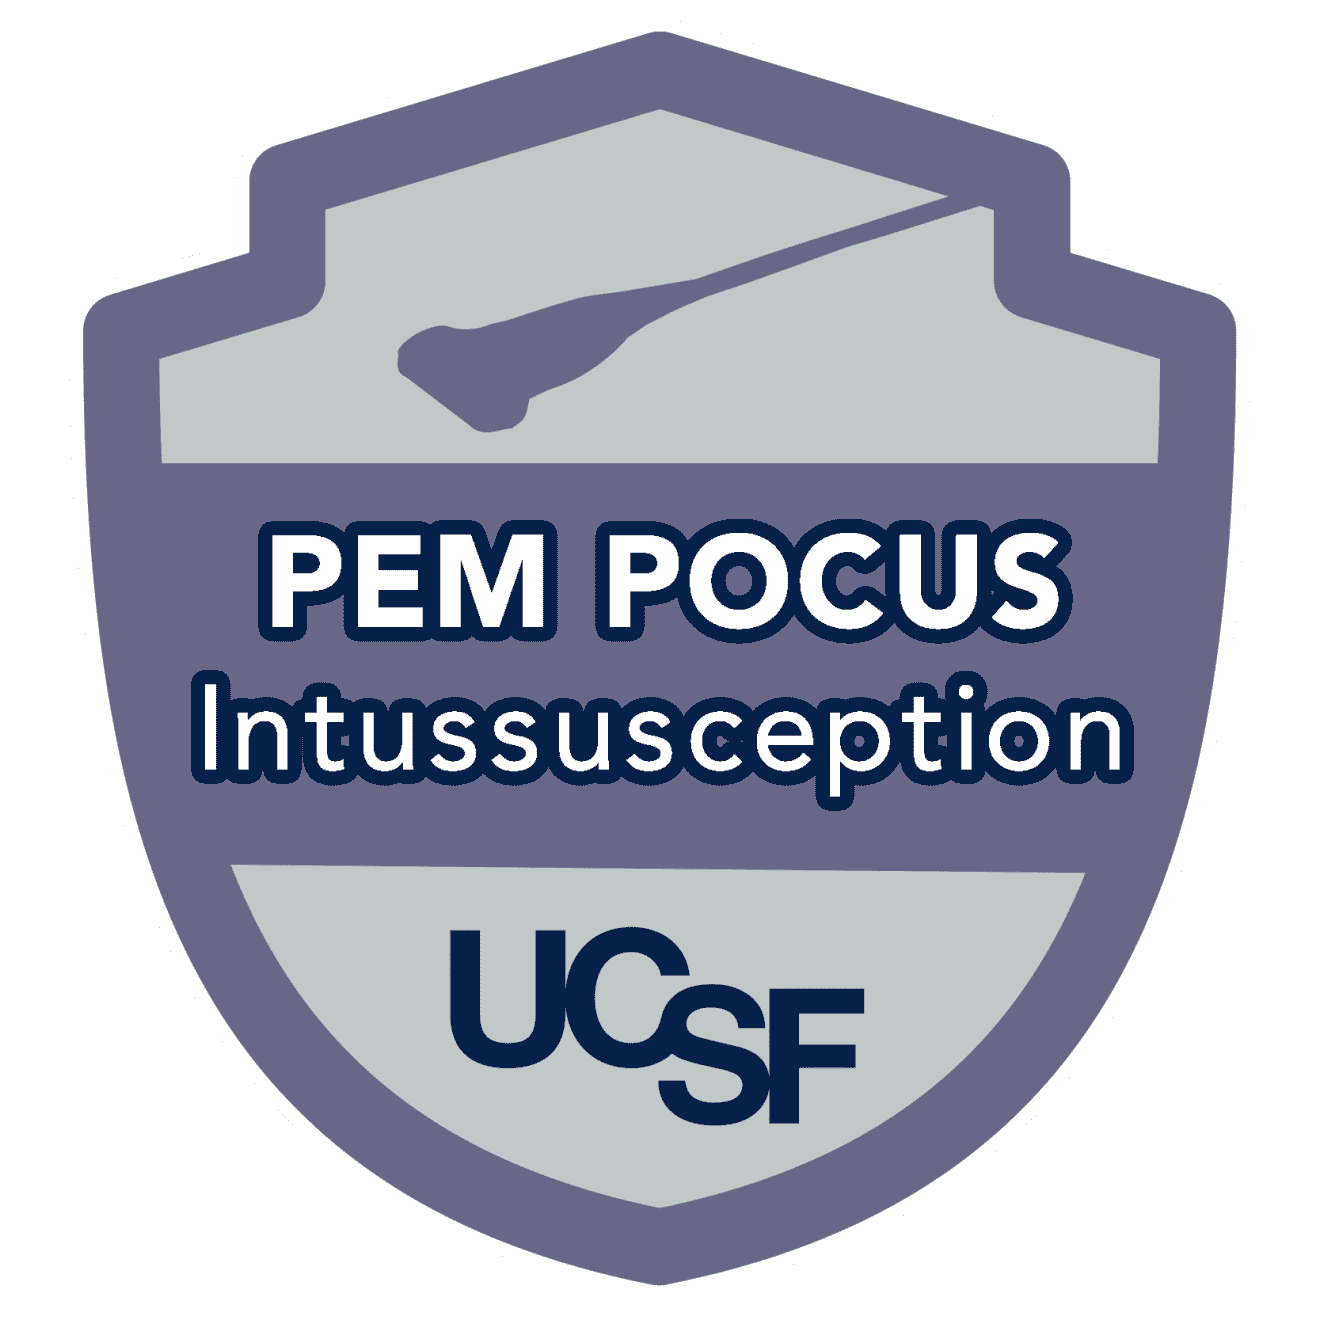 PEM POCUS Intussusception